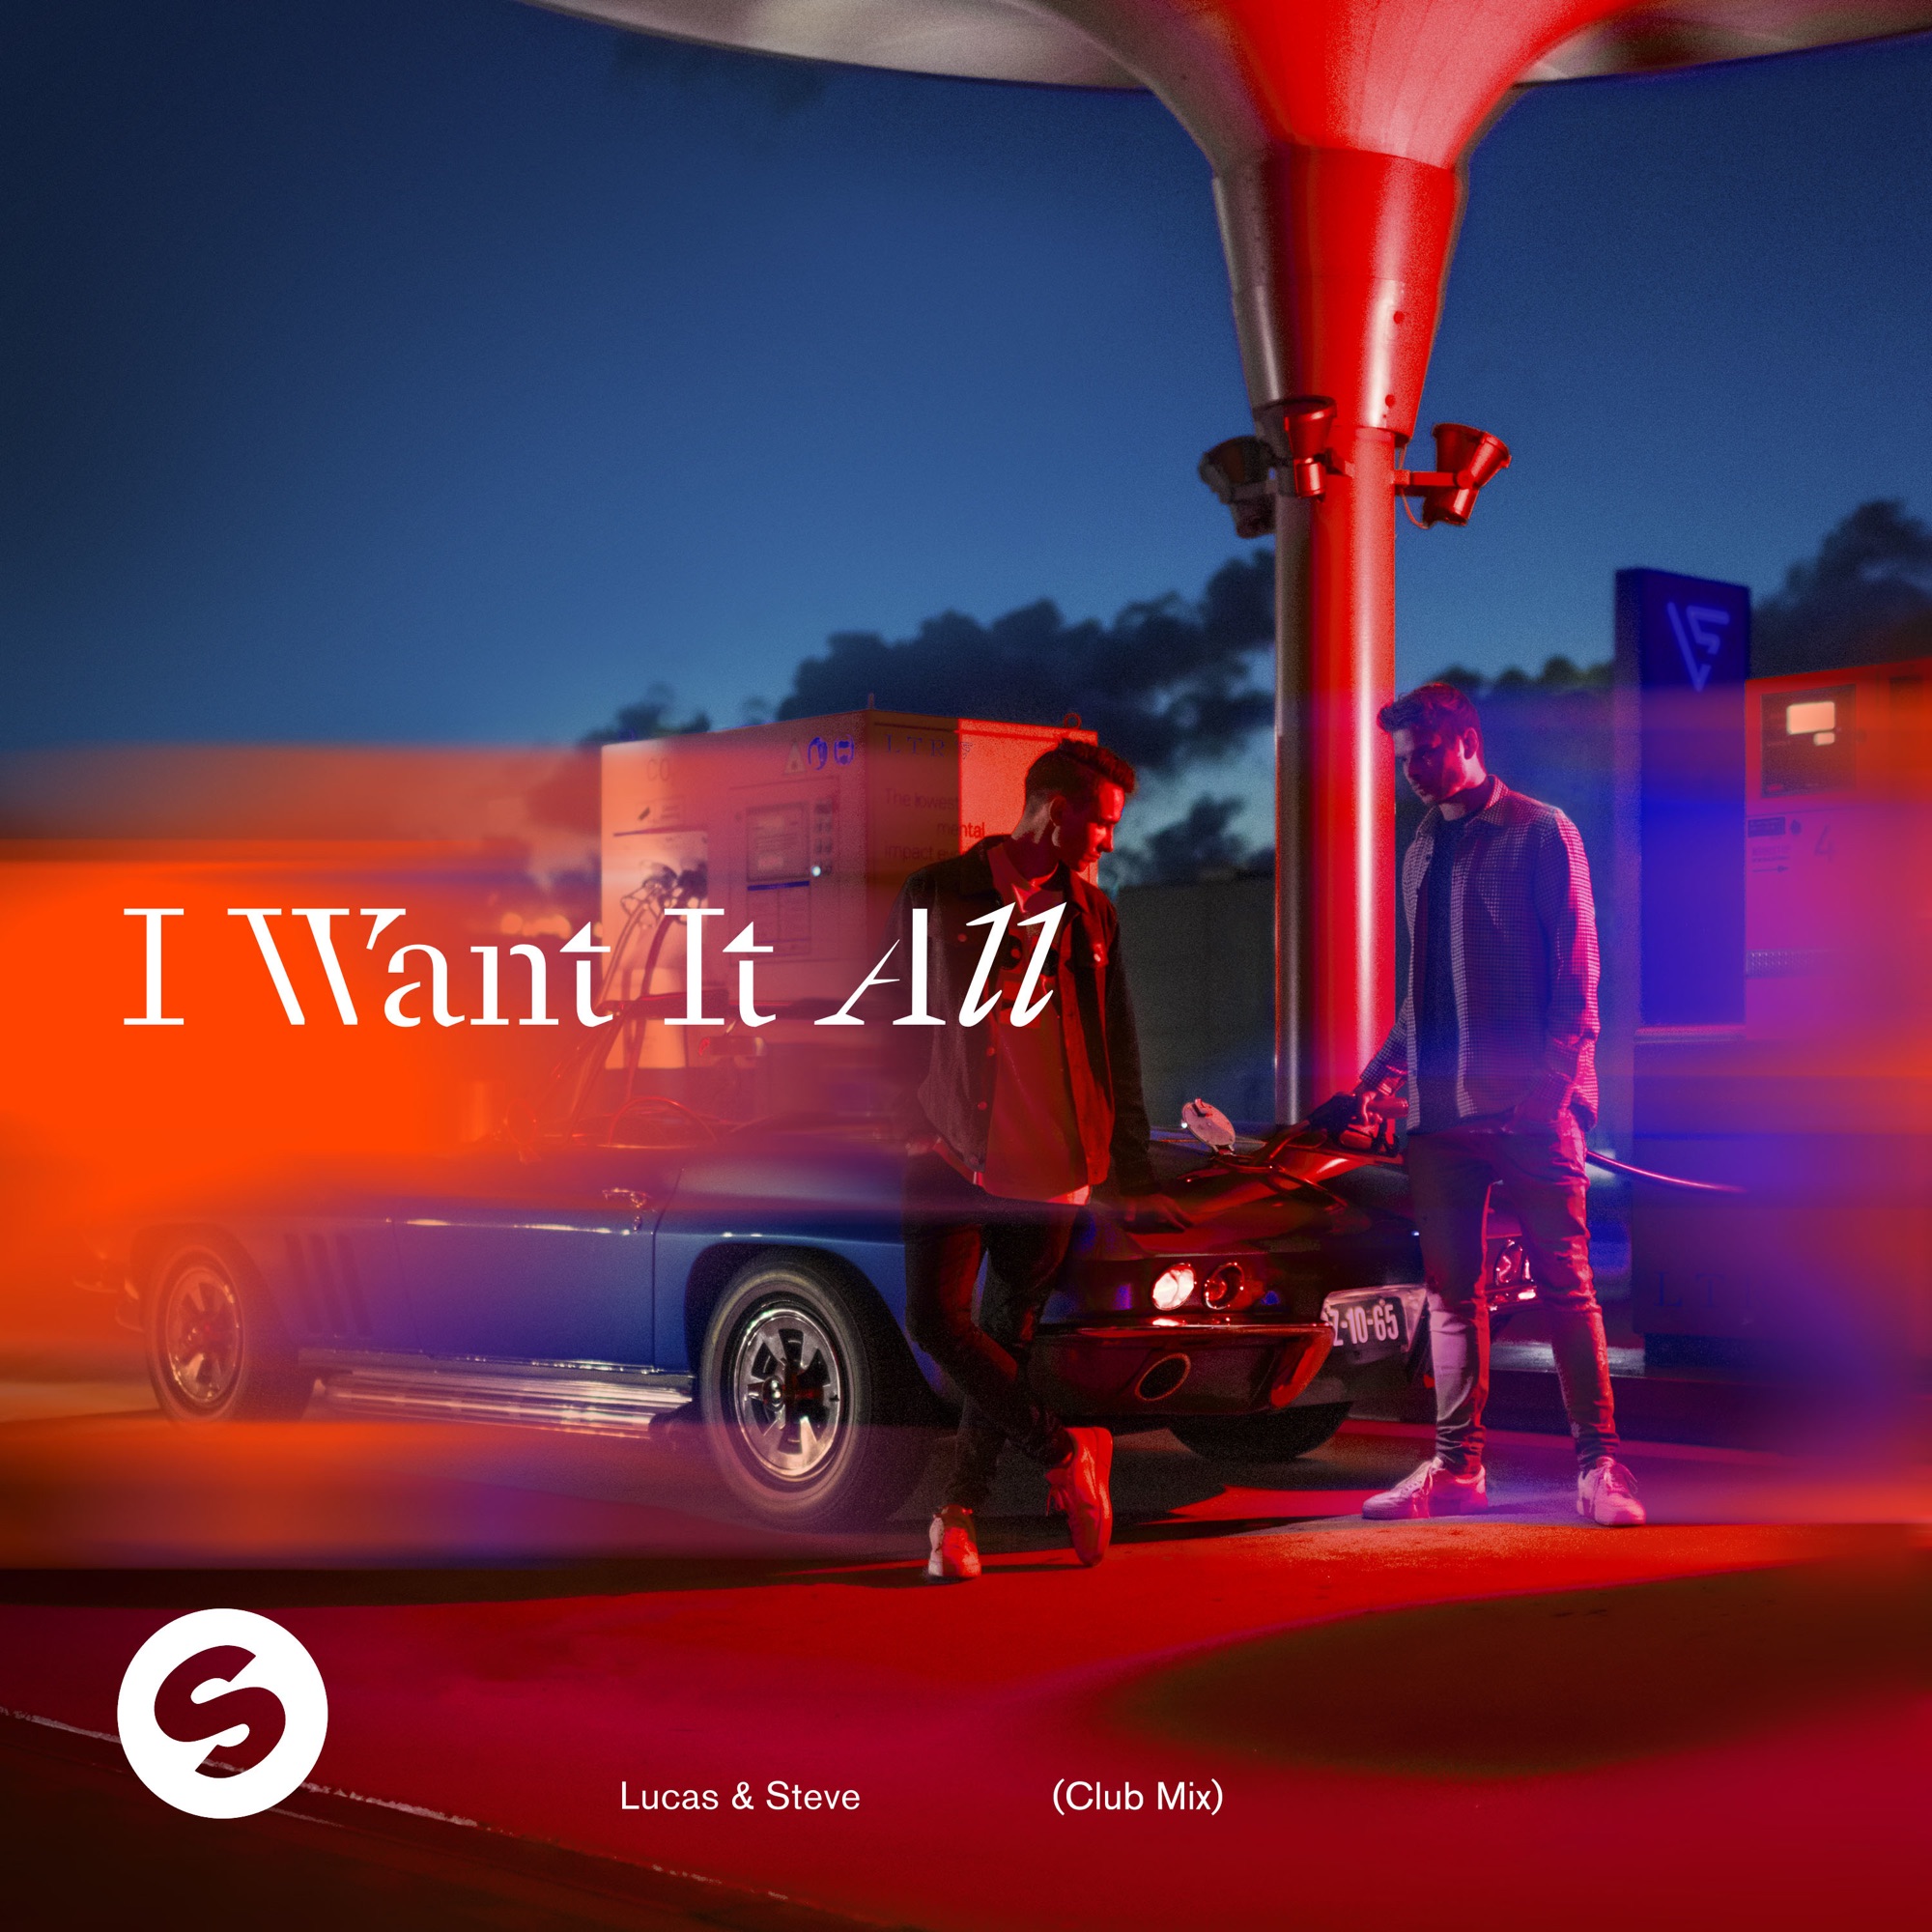 Lucas & Steve - I Want It All (Club Mix) - Single